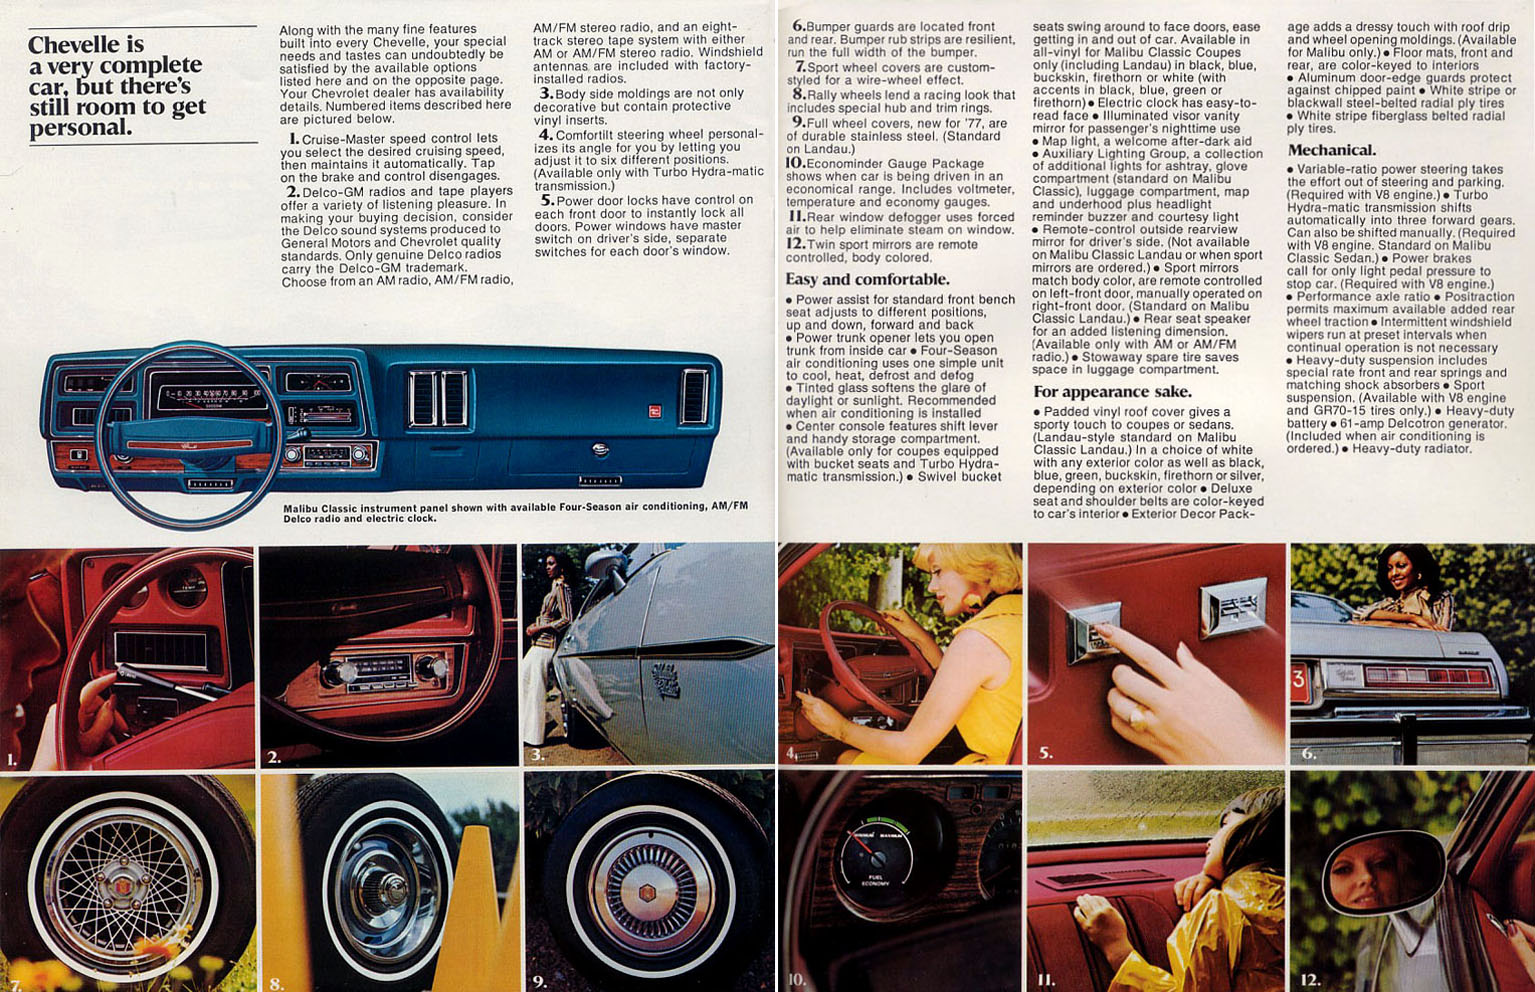 1977 Chevrolet Chevelle